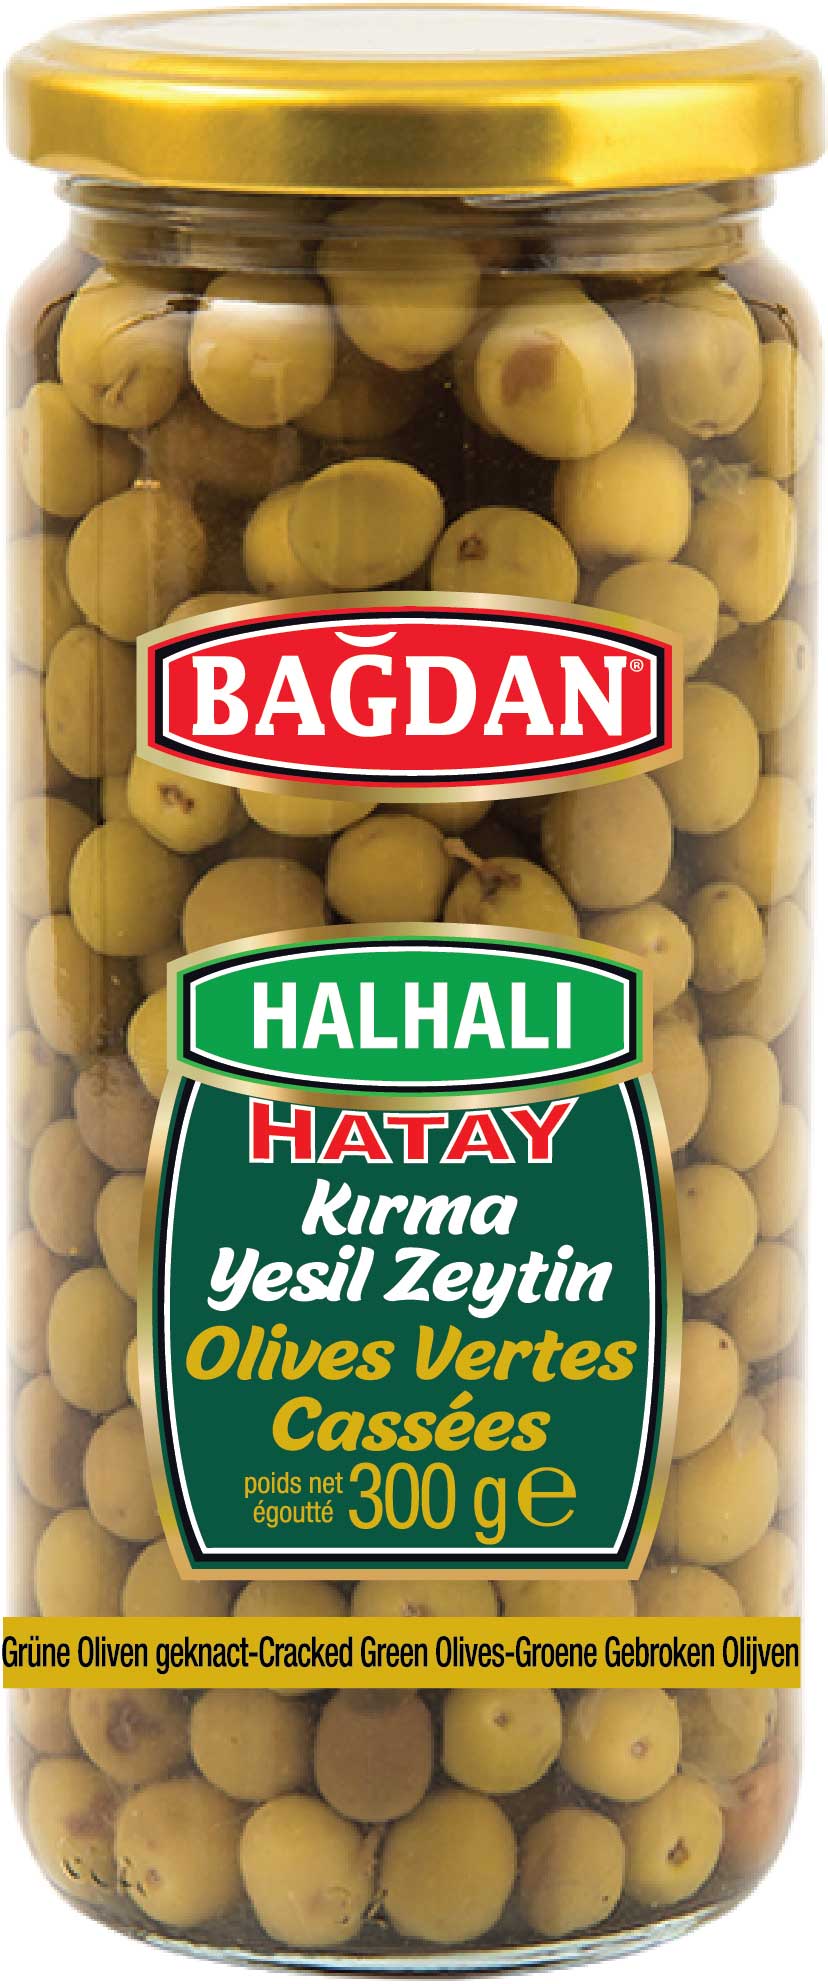 BAGDAN CAM YESIL ZEYTIN HALHALI KIRMA 500CC (olives vertes concassées)